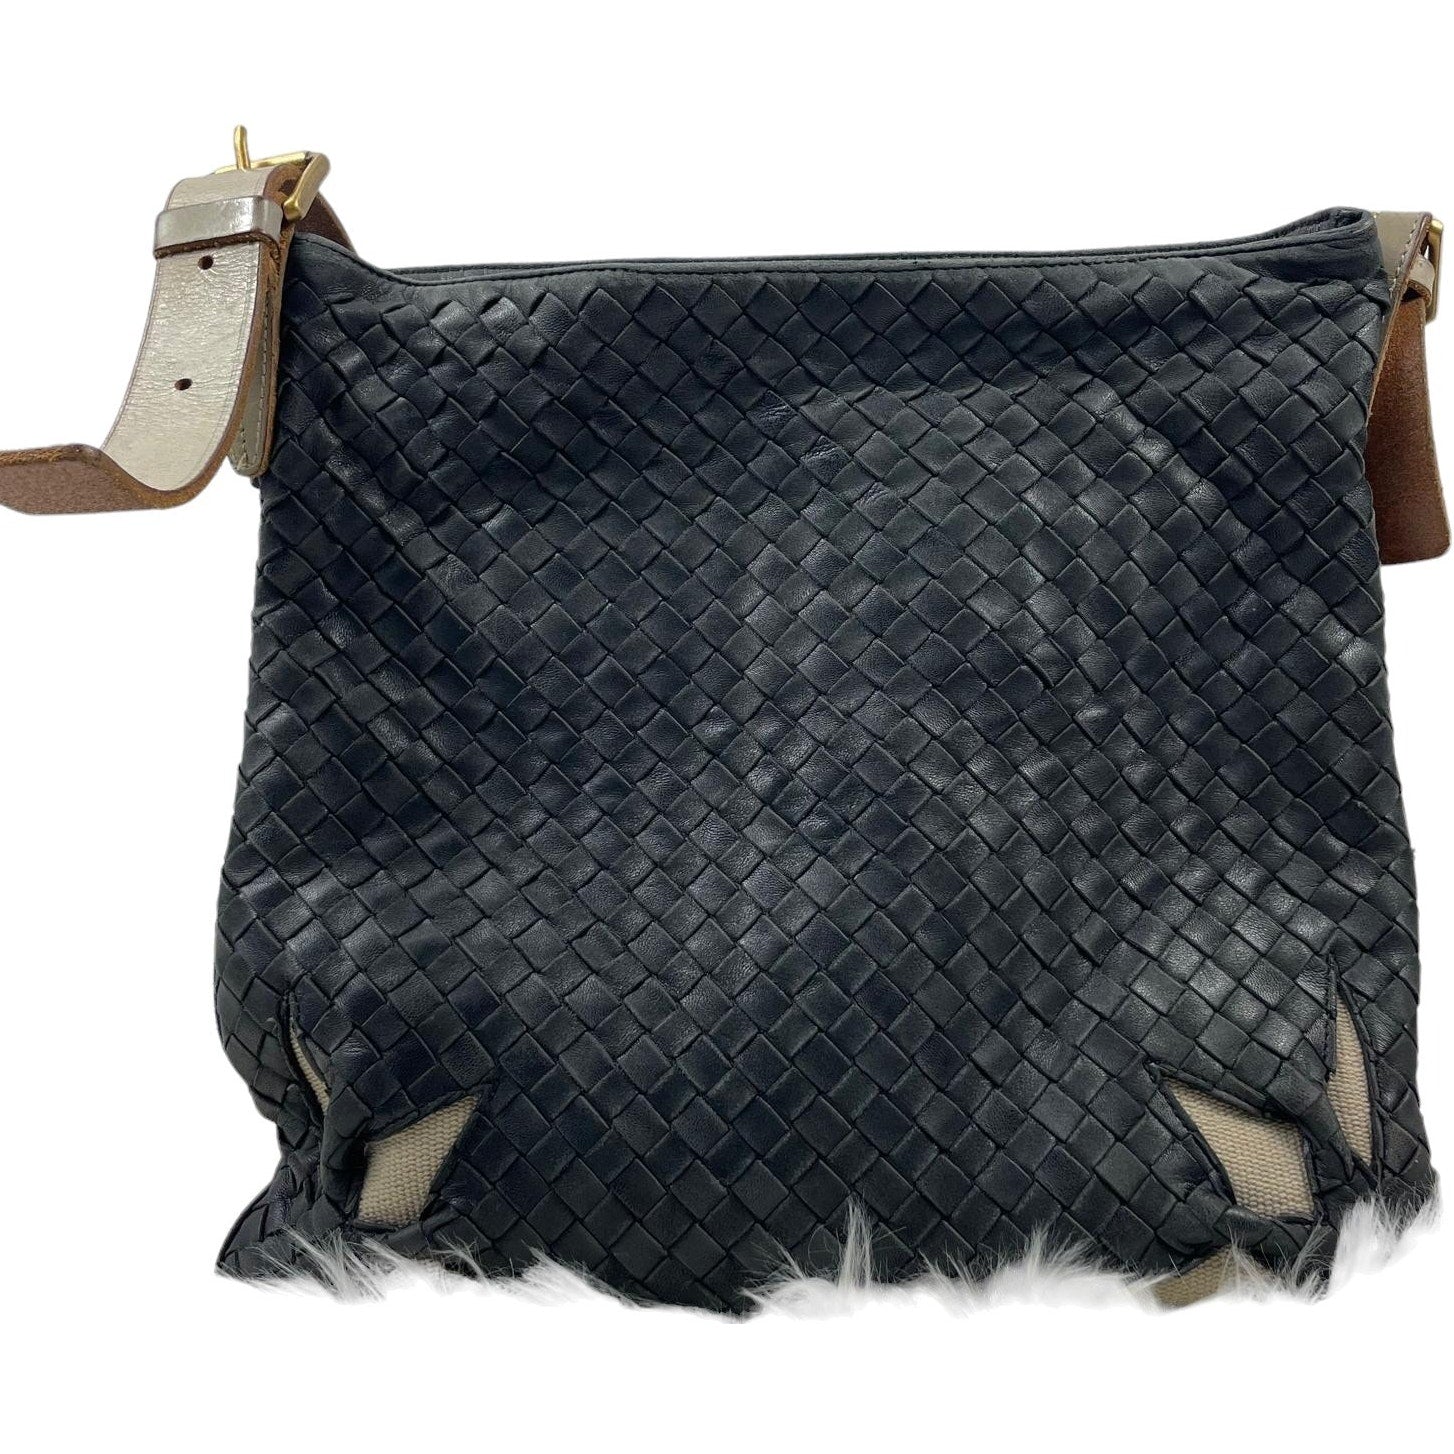 Authentic Bottega Veneta Intrecciato Leather Crossbody Bag Black